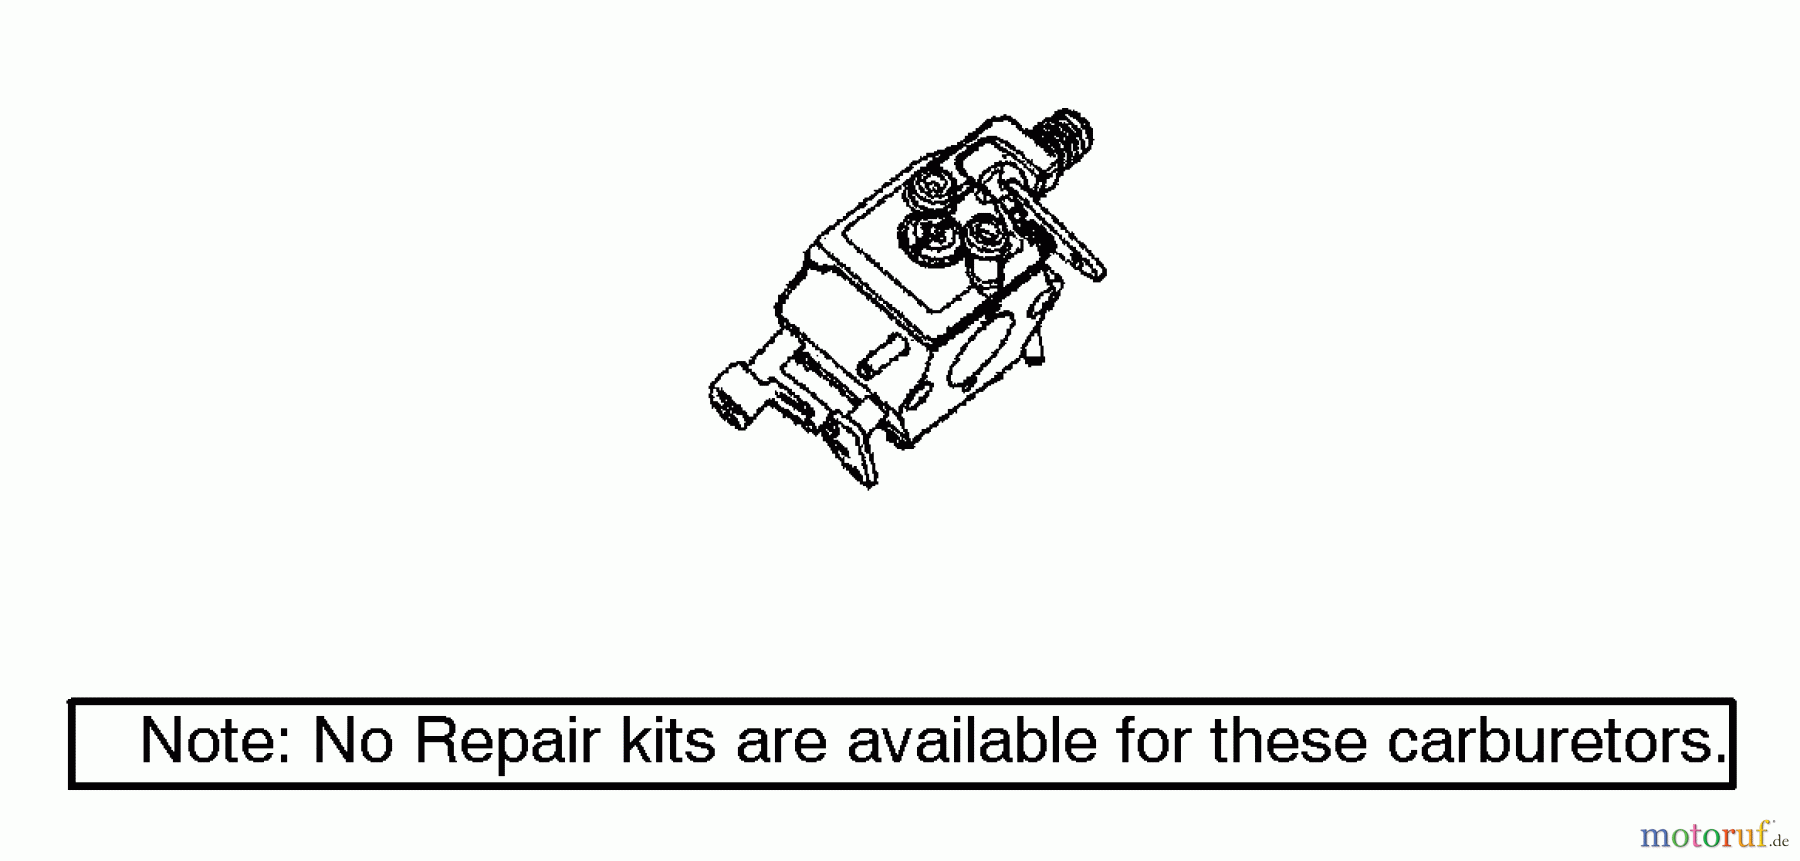  Poulan / Weed Eater Motorsägen 2050 (Type 2) - Poulan Pioneer Chainsaw Carburetor Assembly Kits 530071620/530071820/530071821